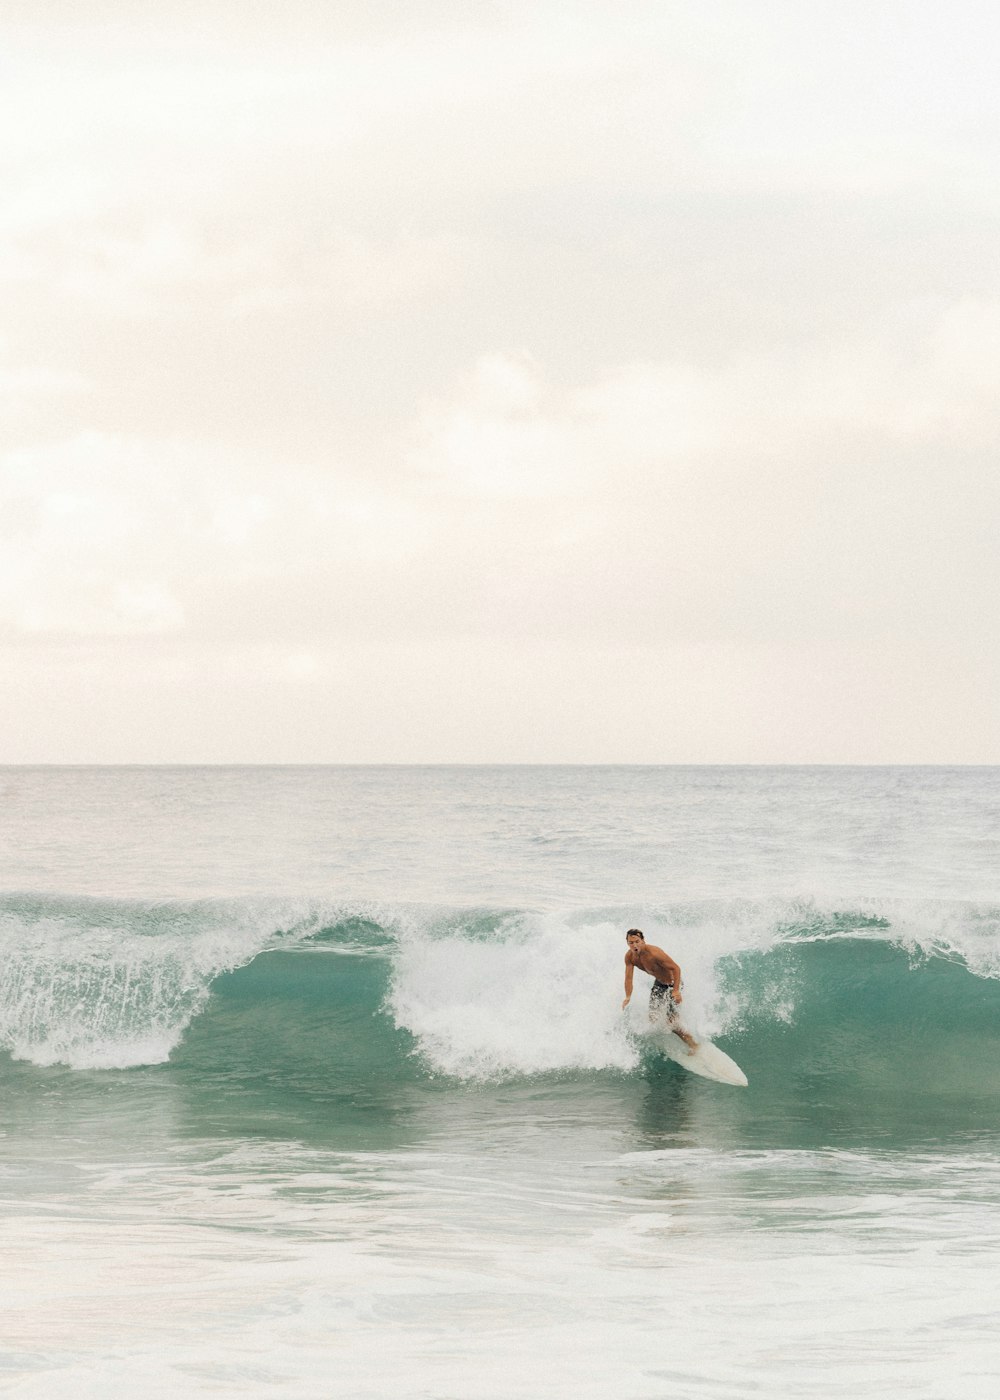 woman in white bikini surfing on sea waves during daytime